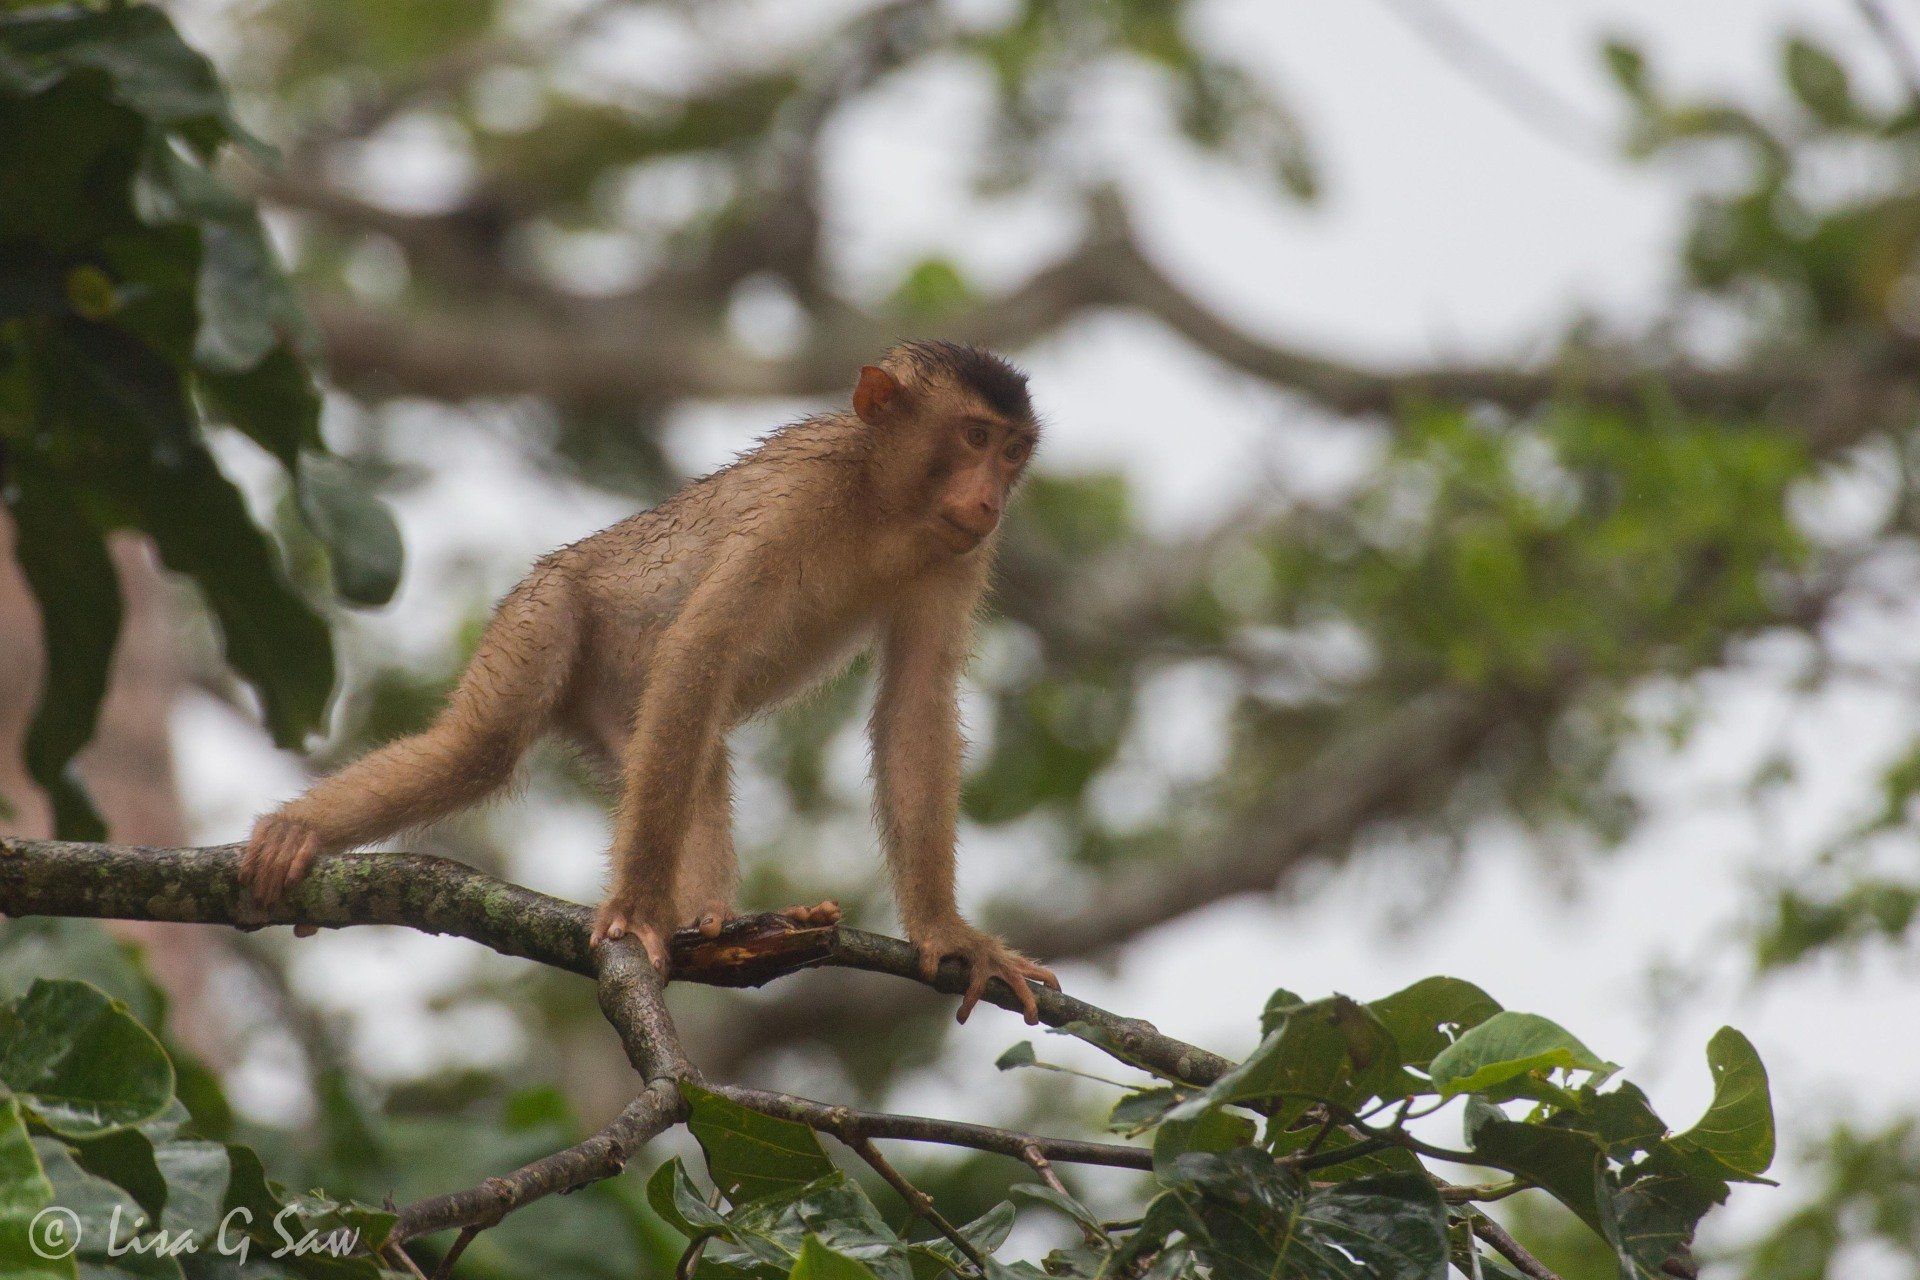 A wet young Long-Tailed Macaque, Kinabatangan River